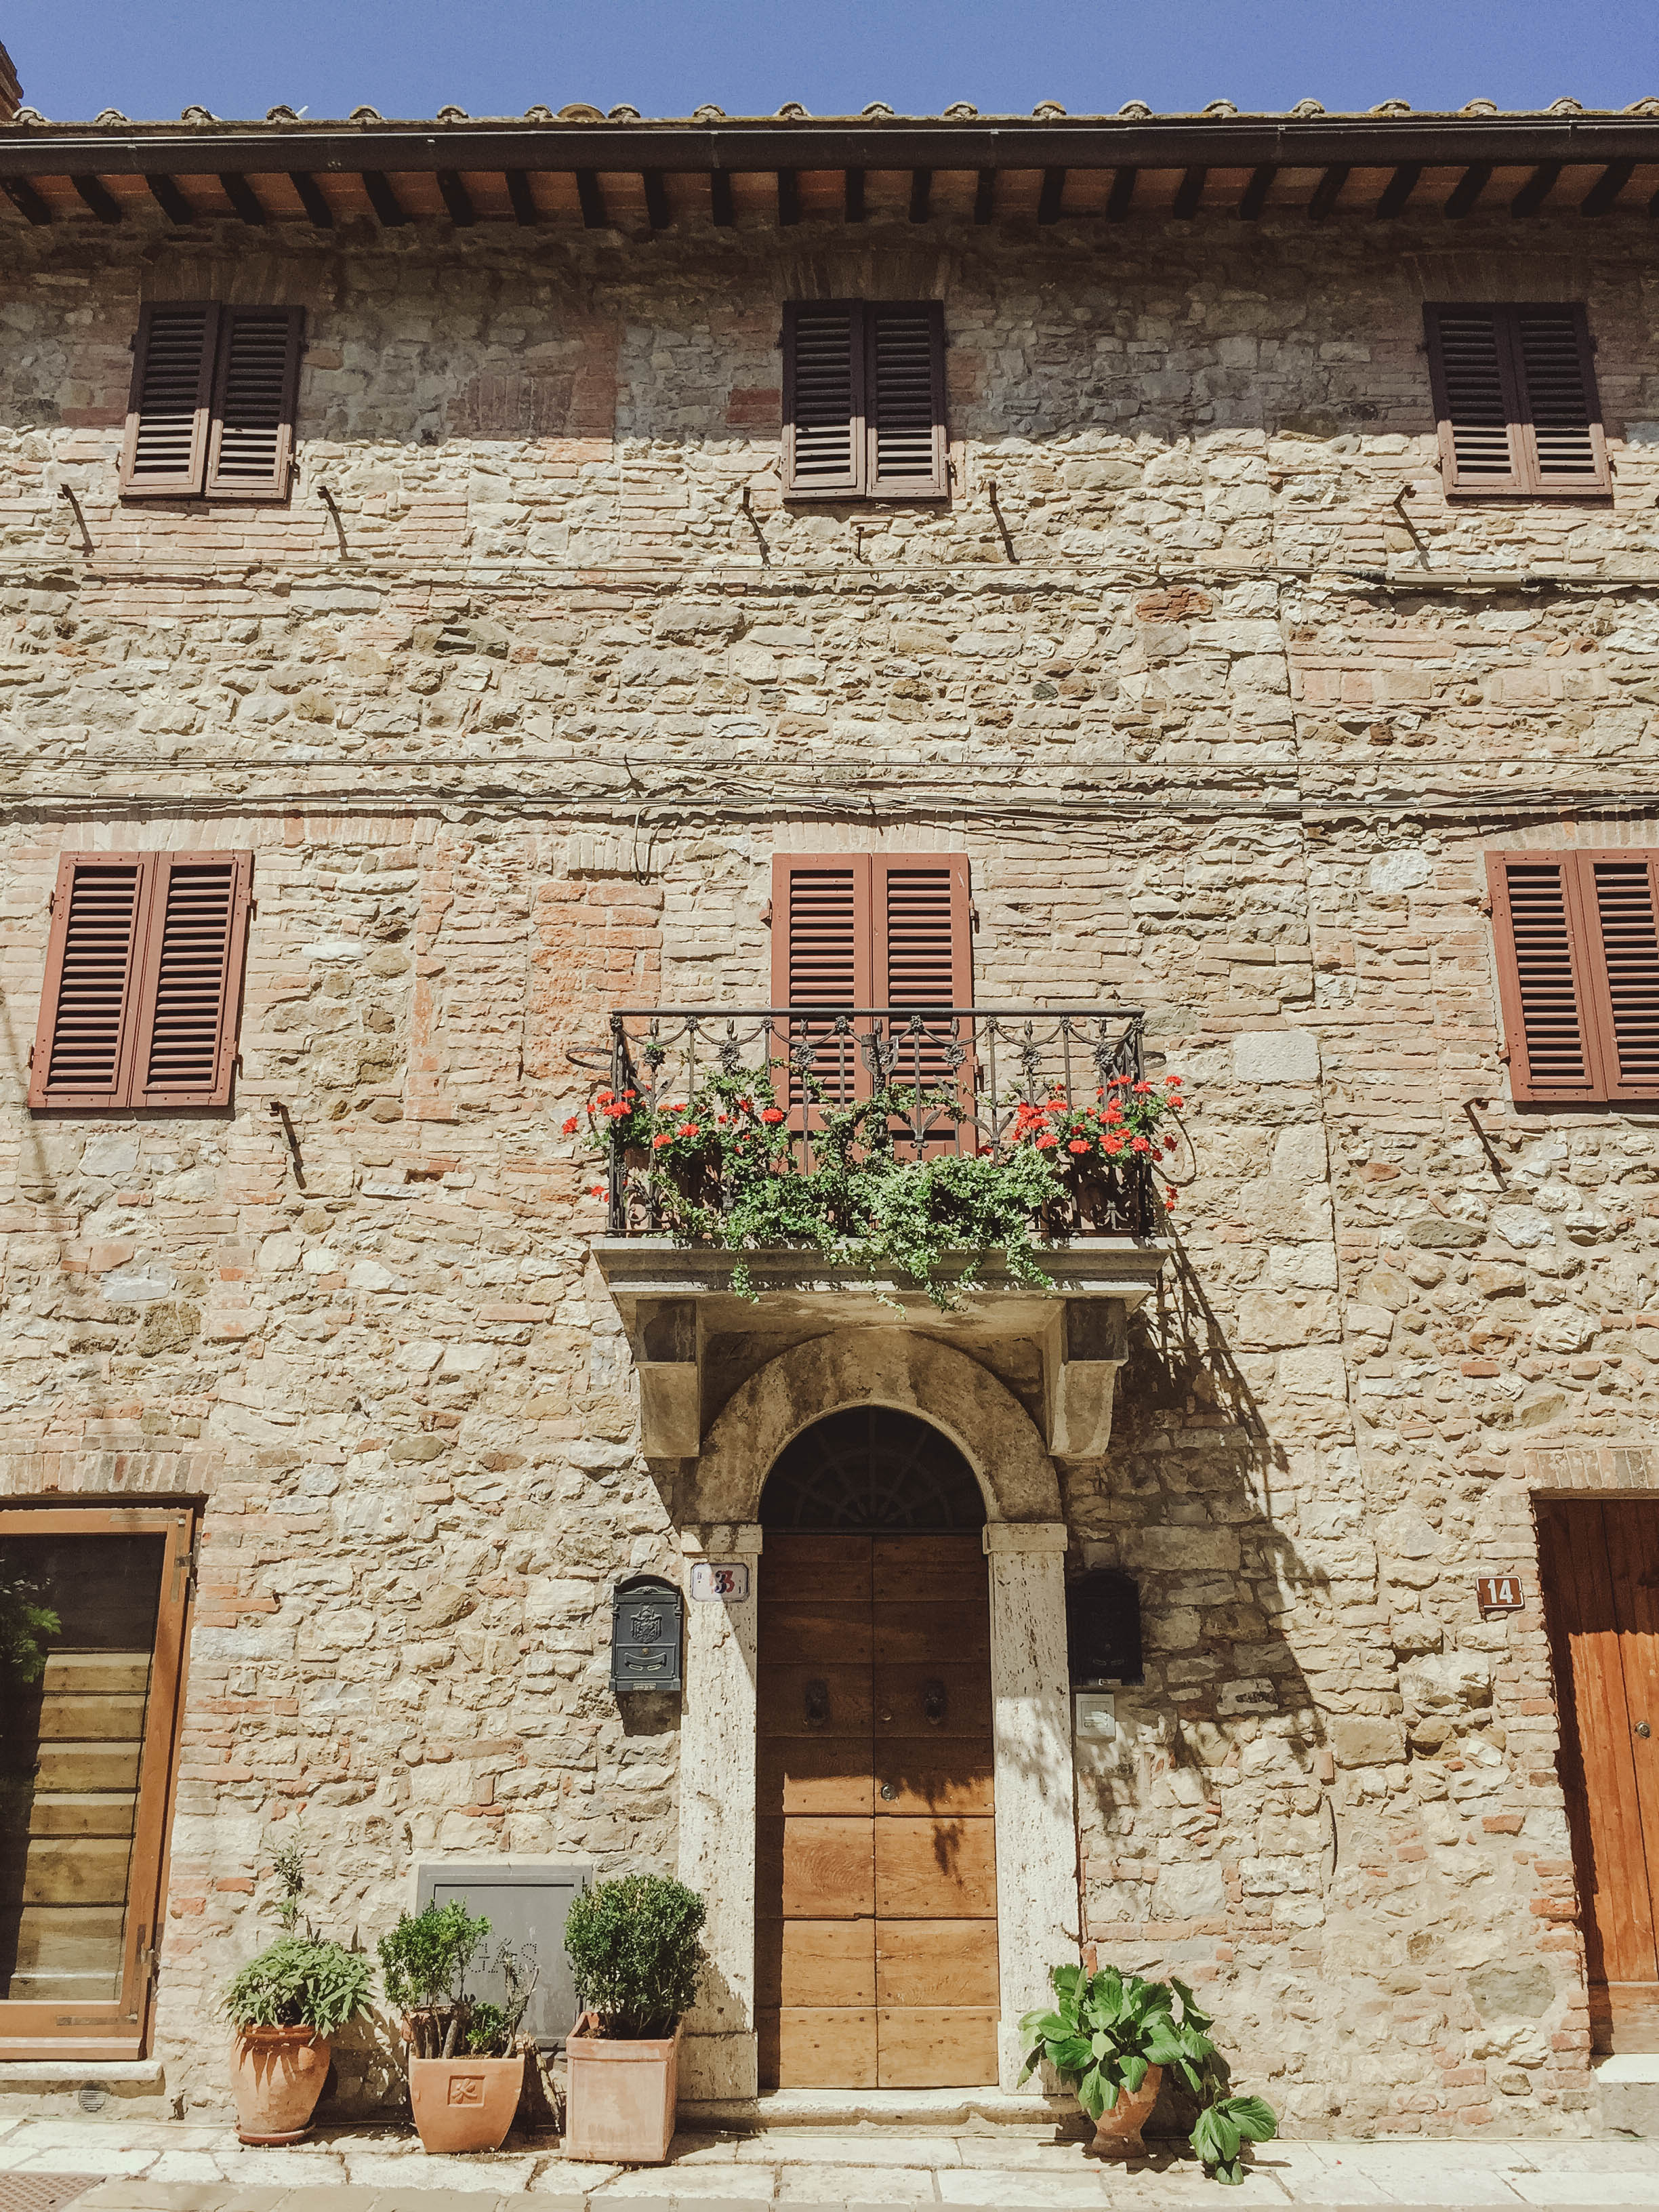 Tuscany - Architecture